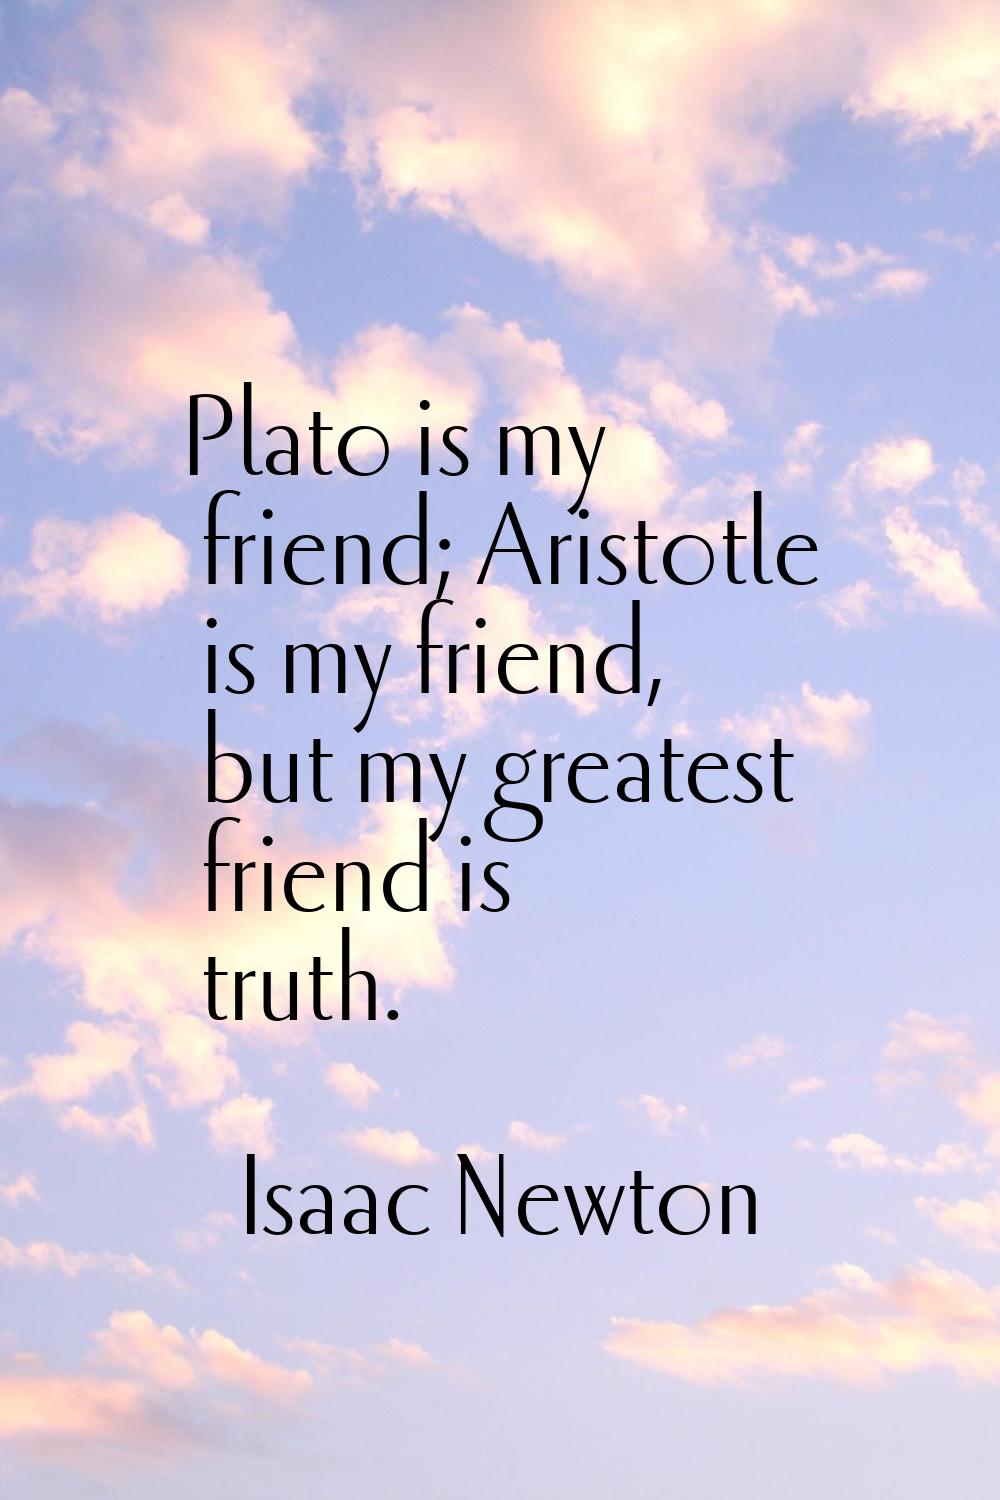 Plato is my friend; Aristotle is my friend, but my greatest friend is truth.